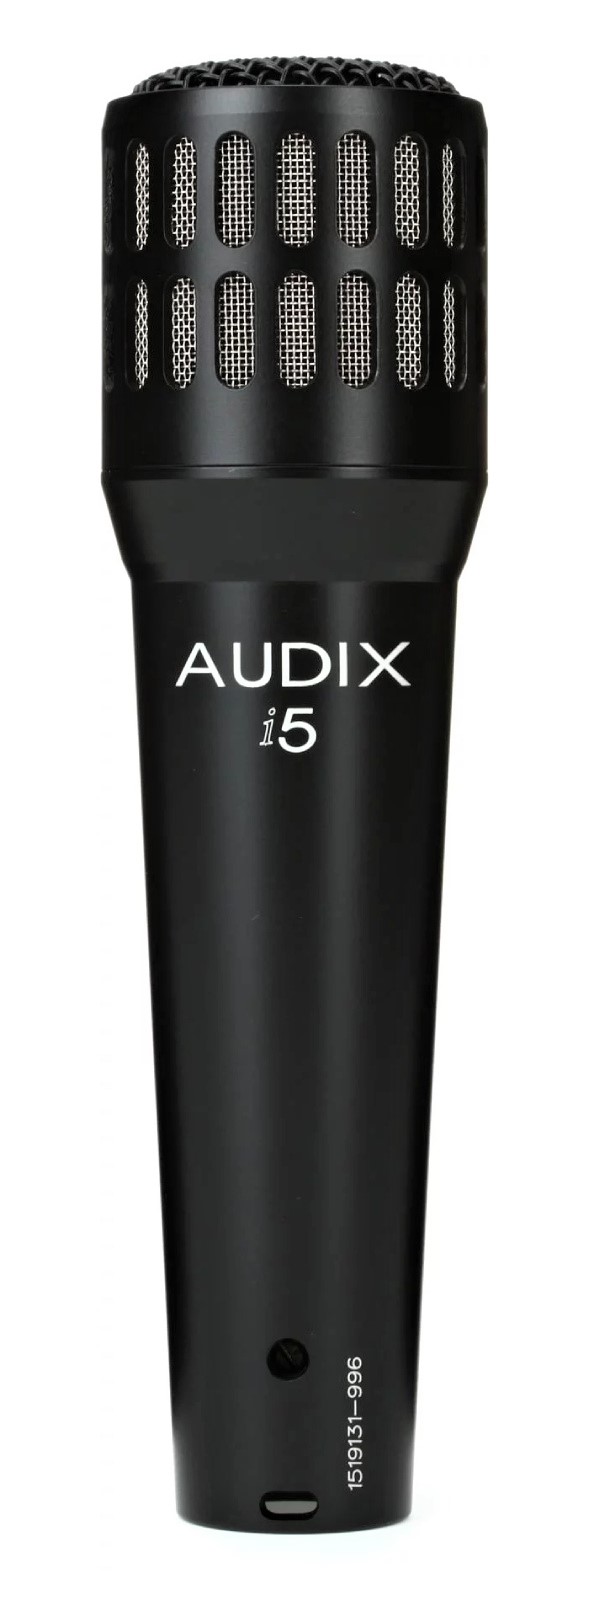 AUDIX I5